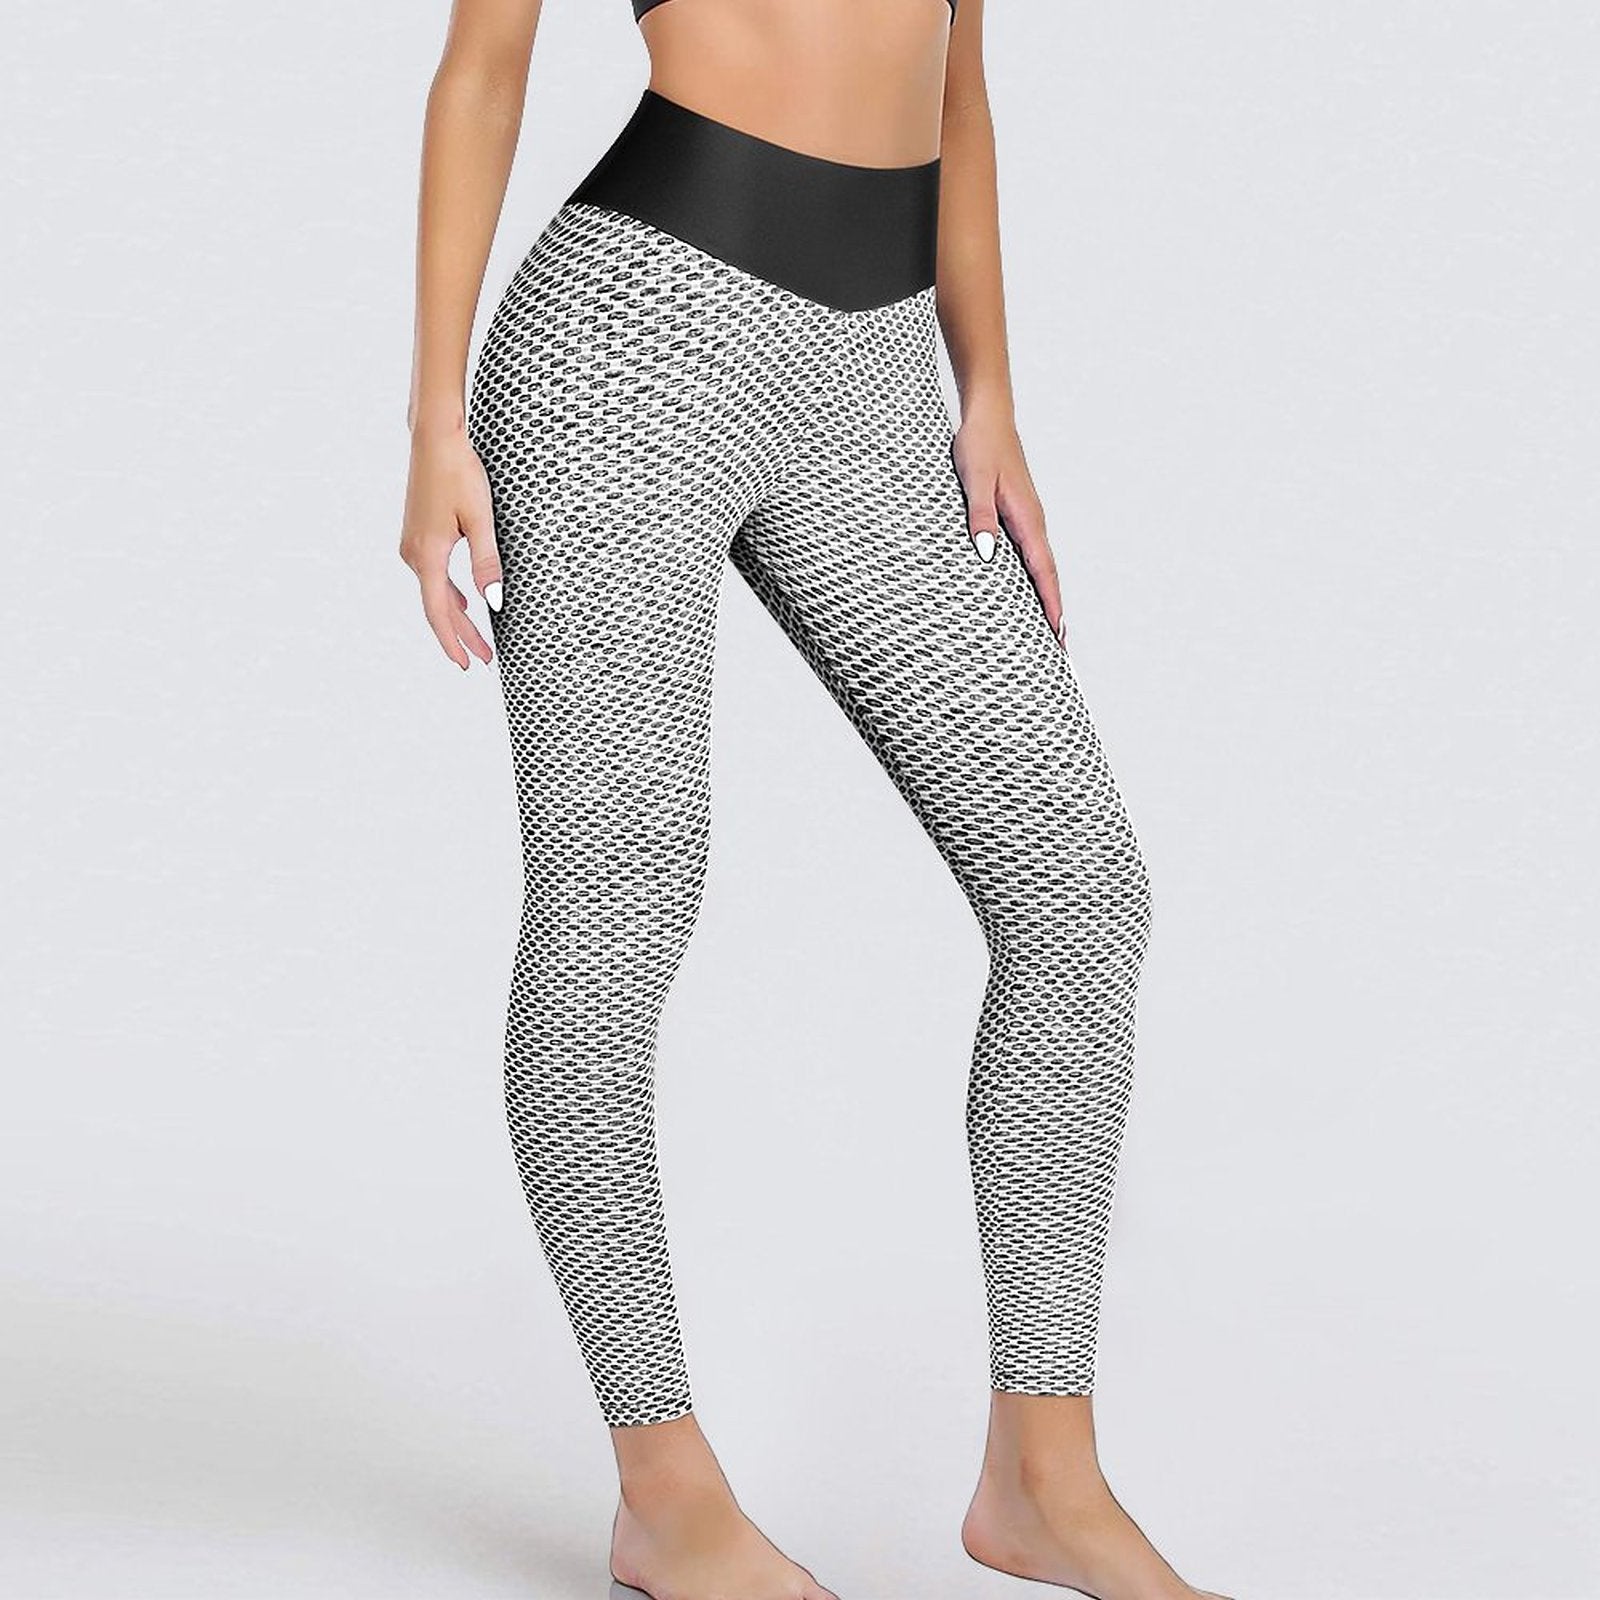 Honeycomb Textured Yoga Pants for Women onvels